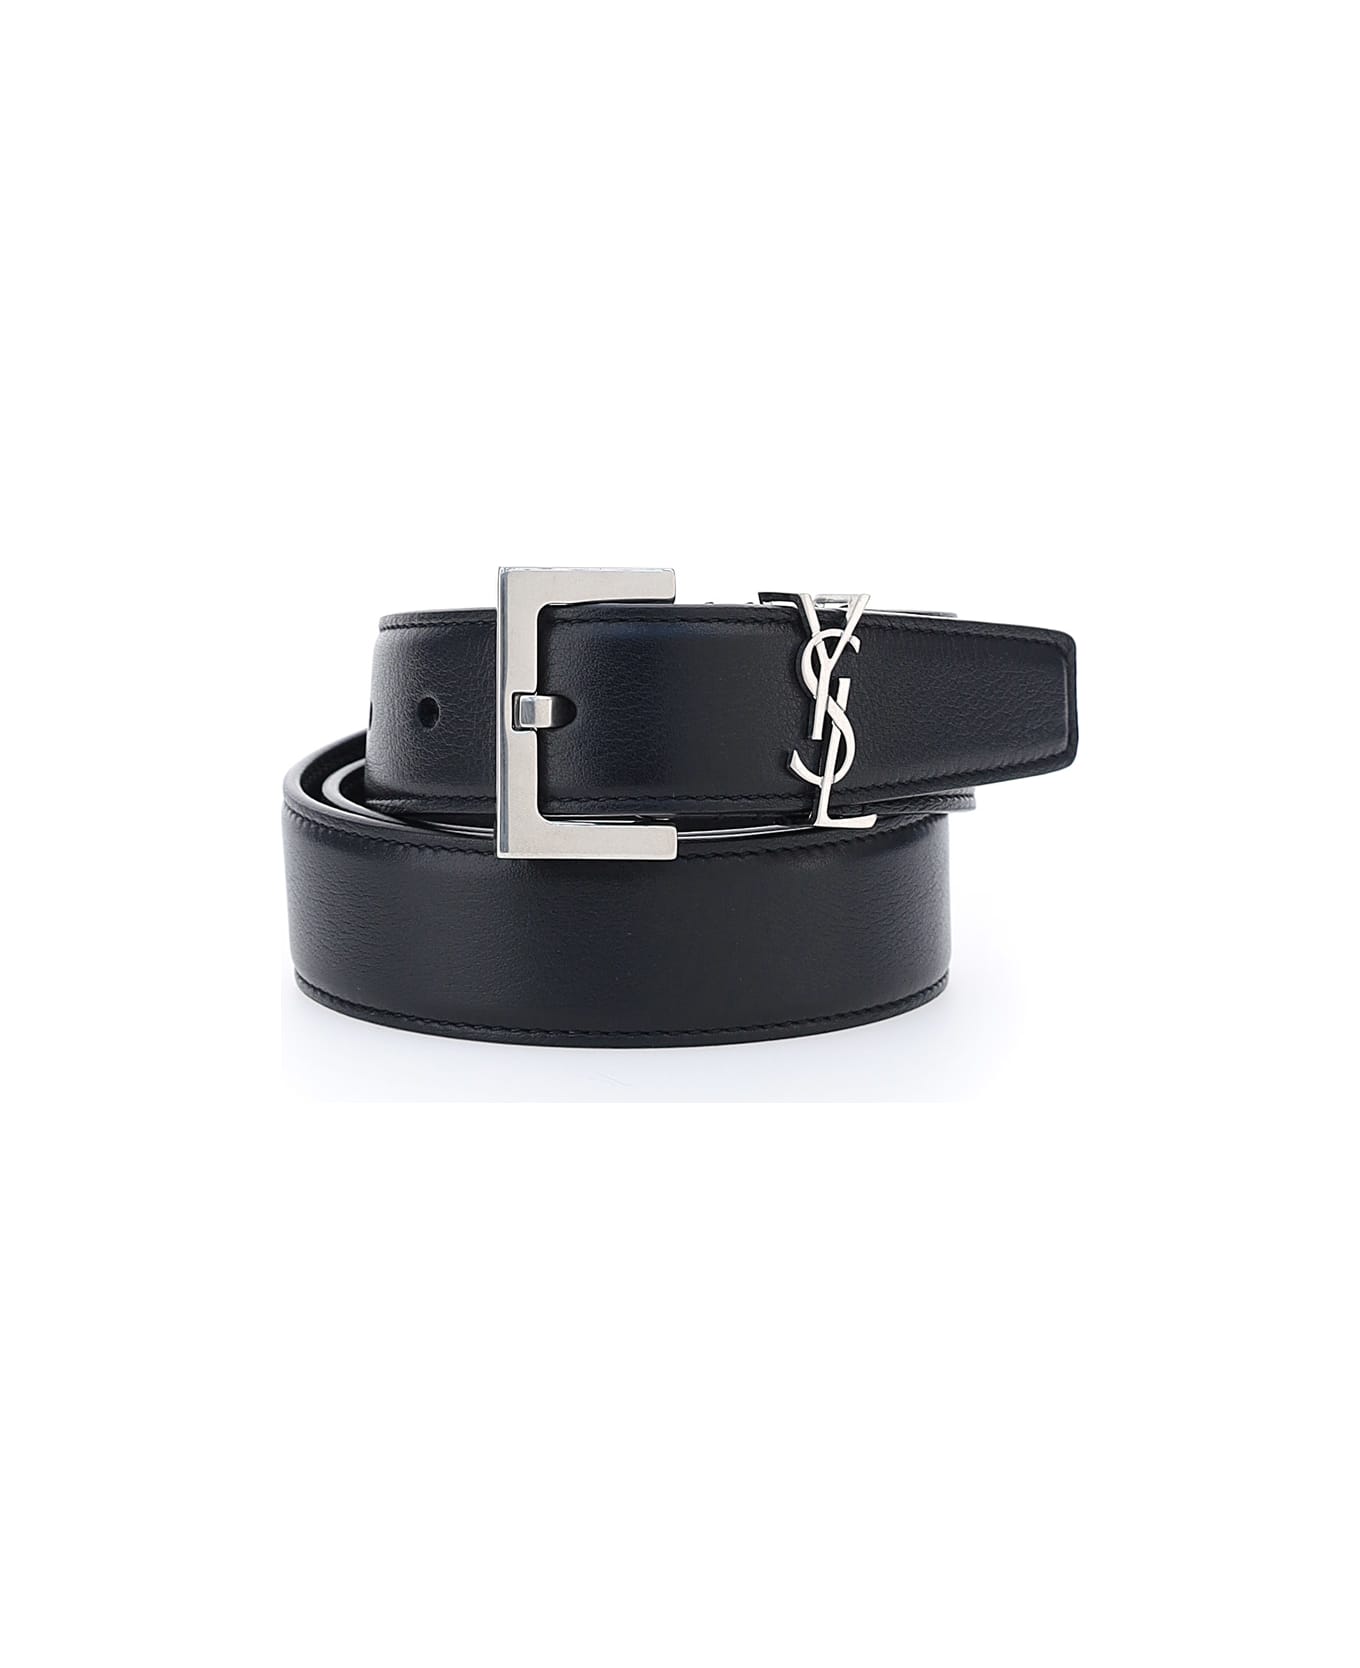 Saint Laurent Leather Belt With Silver Logo - Nero ベルト